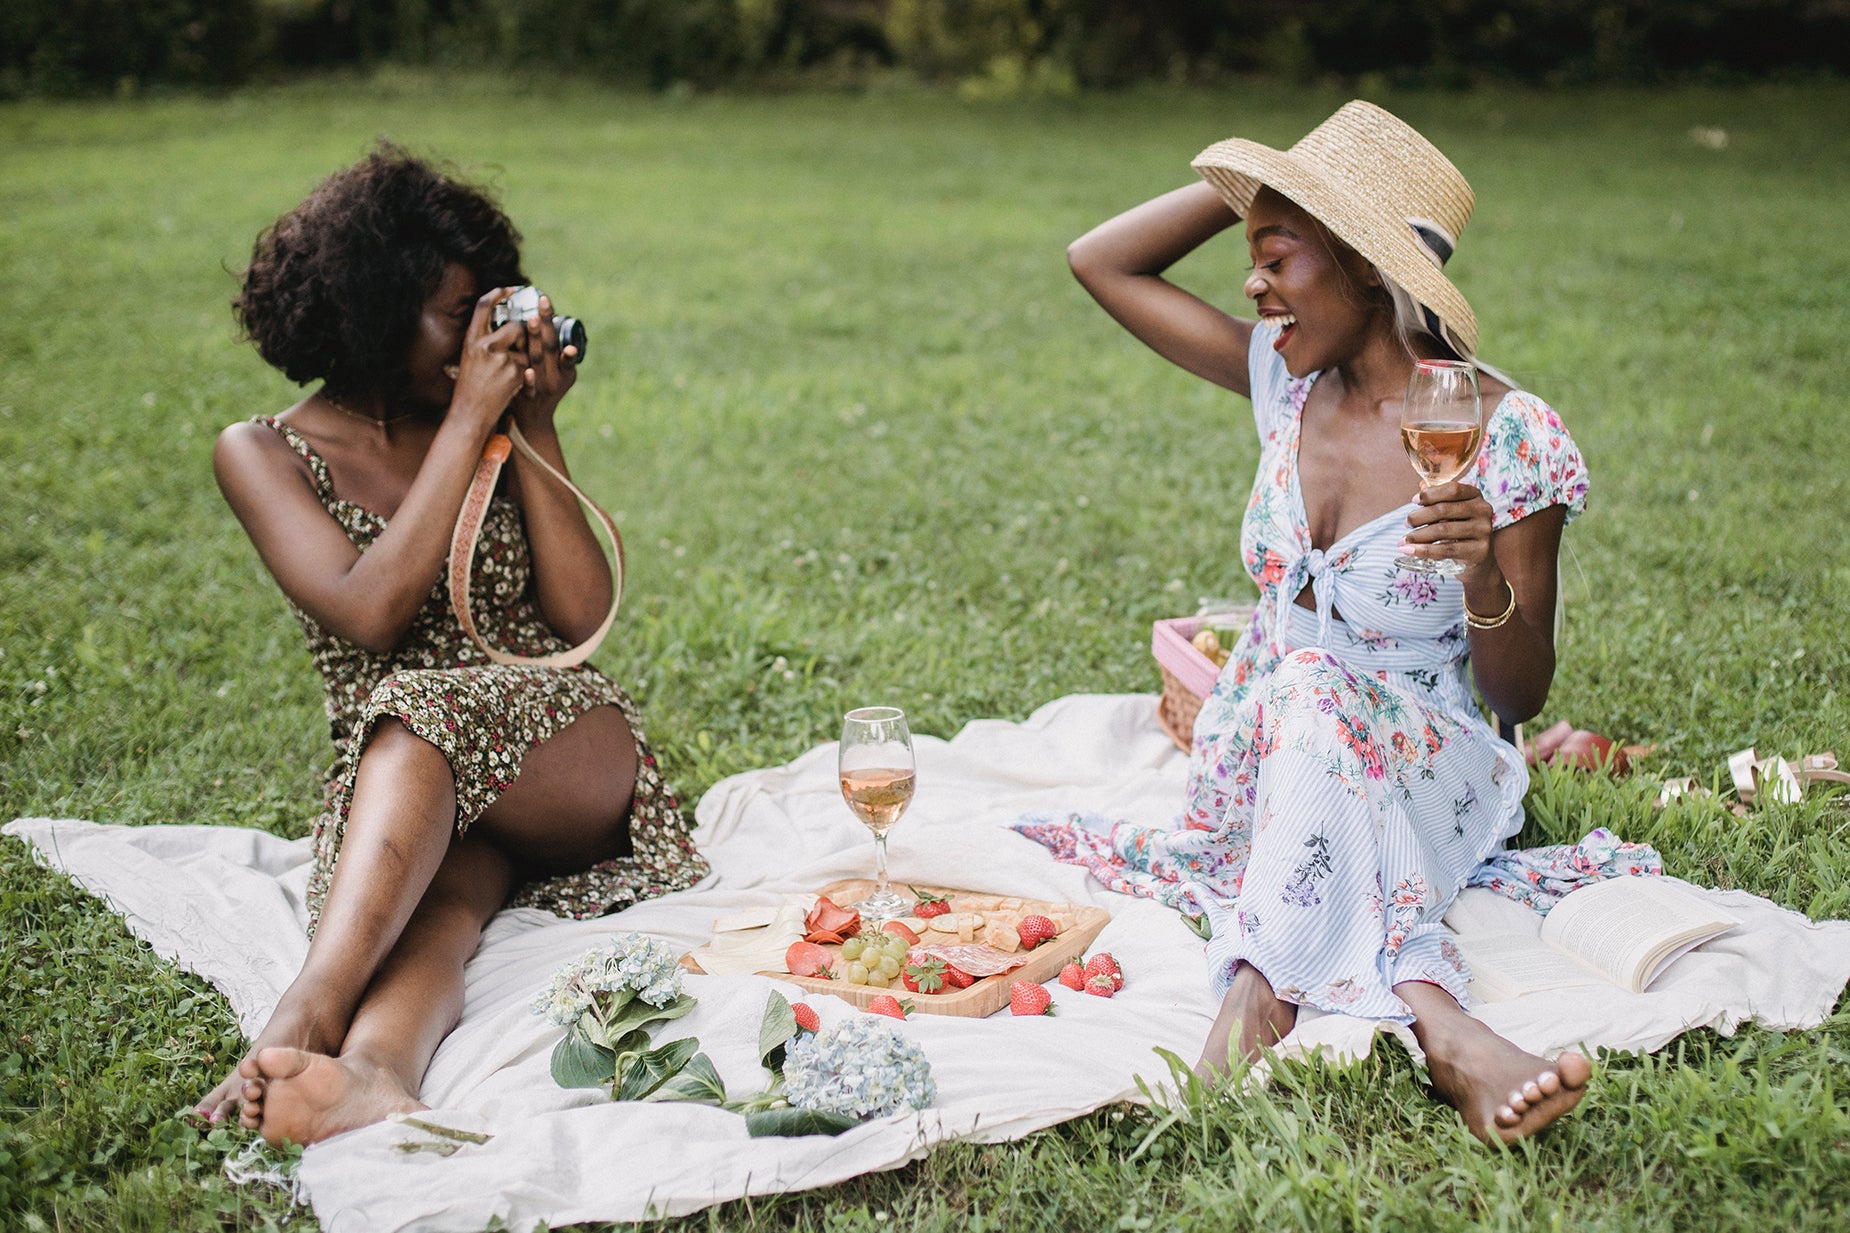 Two women having a picnic